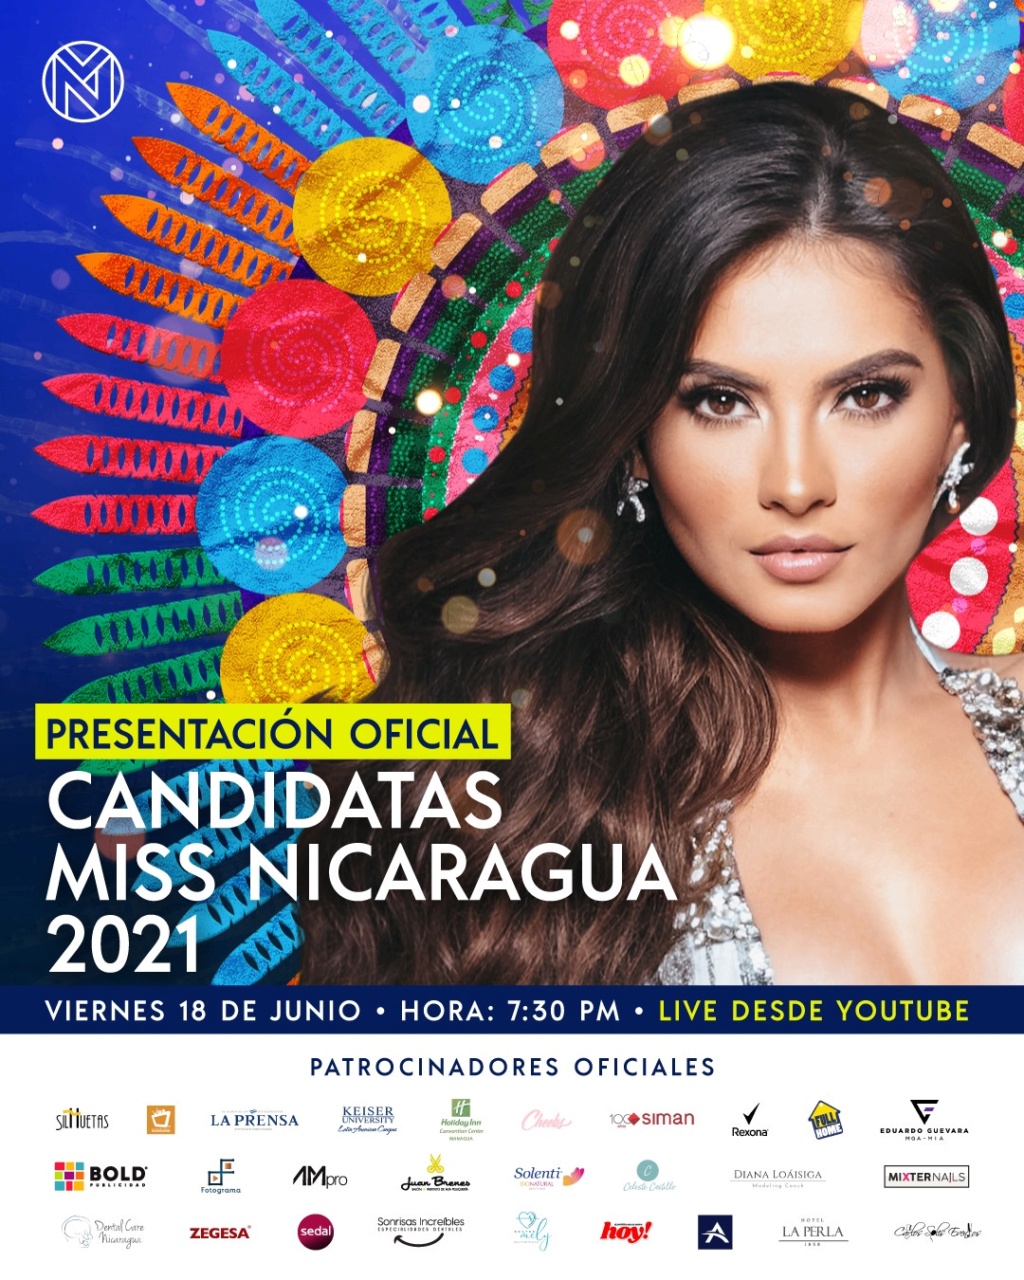 MISS NICARAGUA 2021 is Allison Wassmer of Managua 20141710